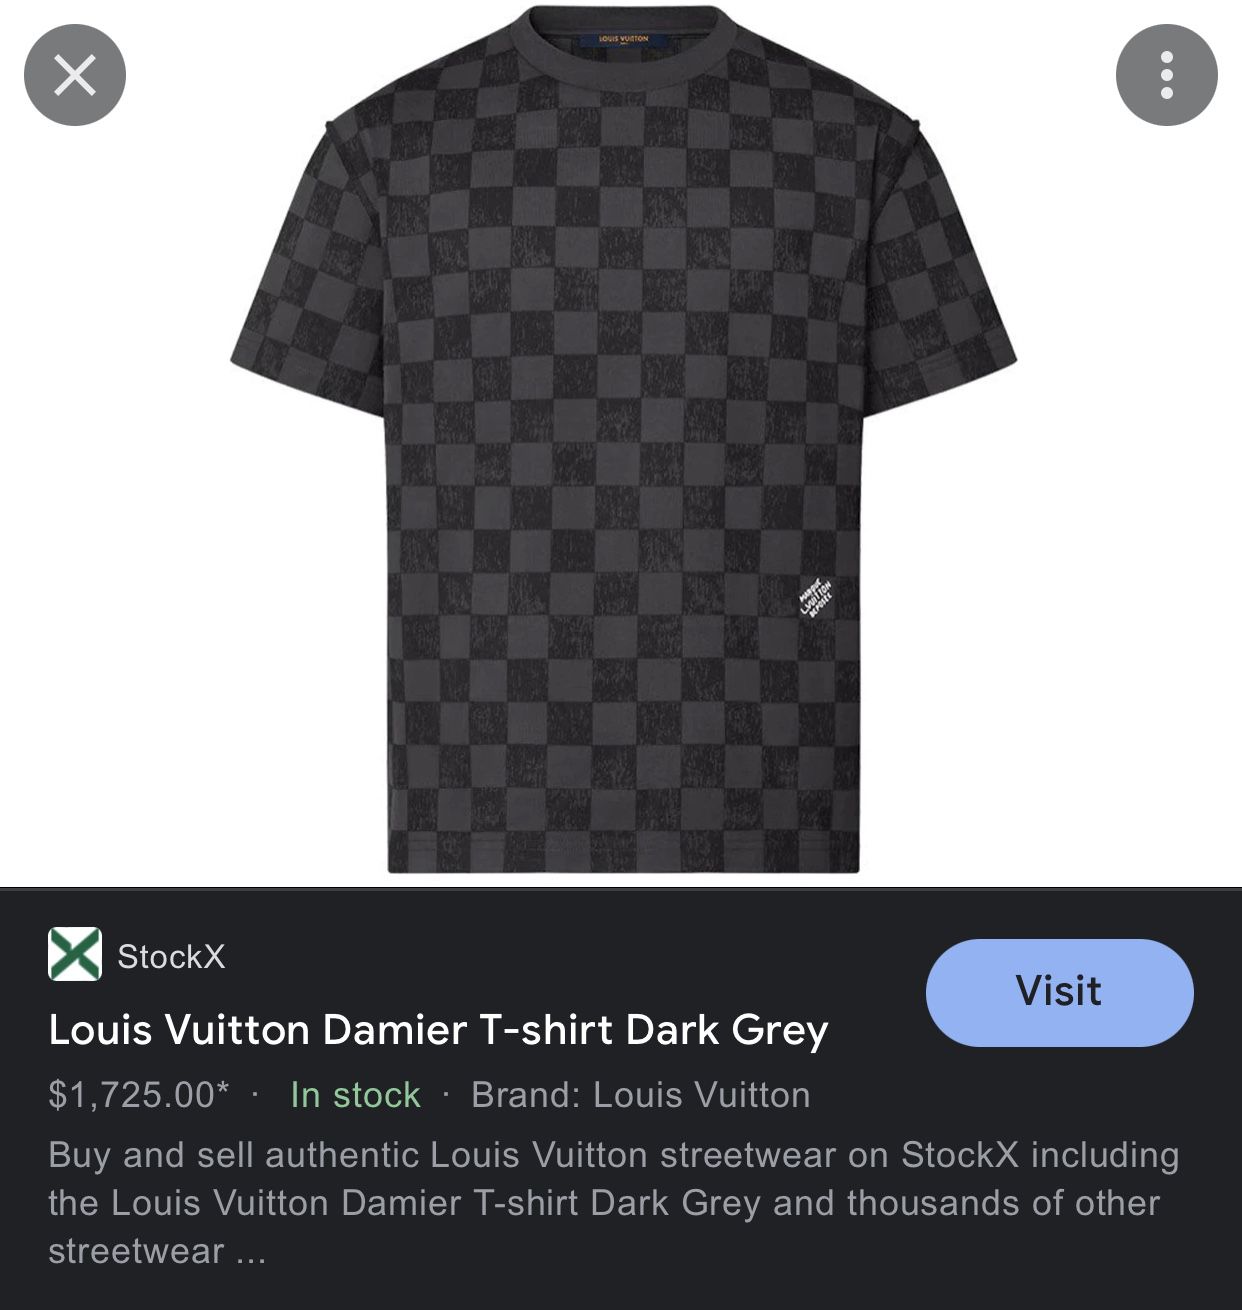 Buy Other Brands Louis Vuitton Streetwear - StockX